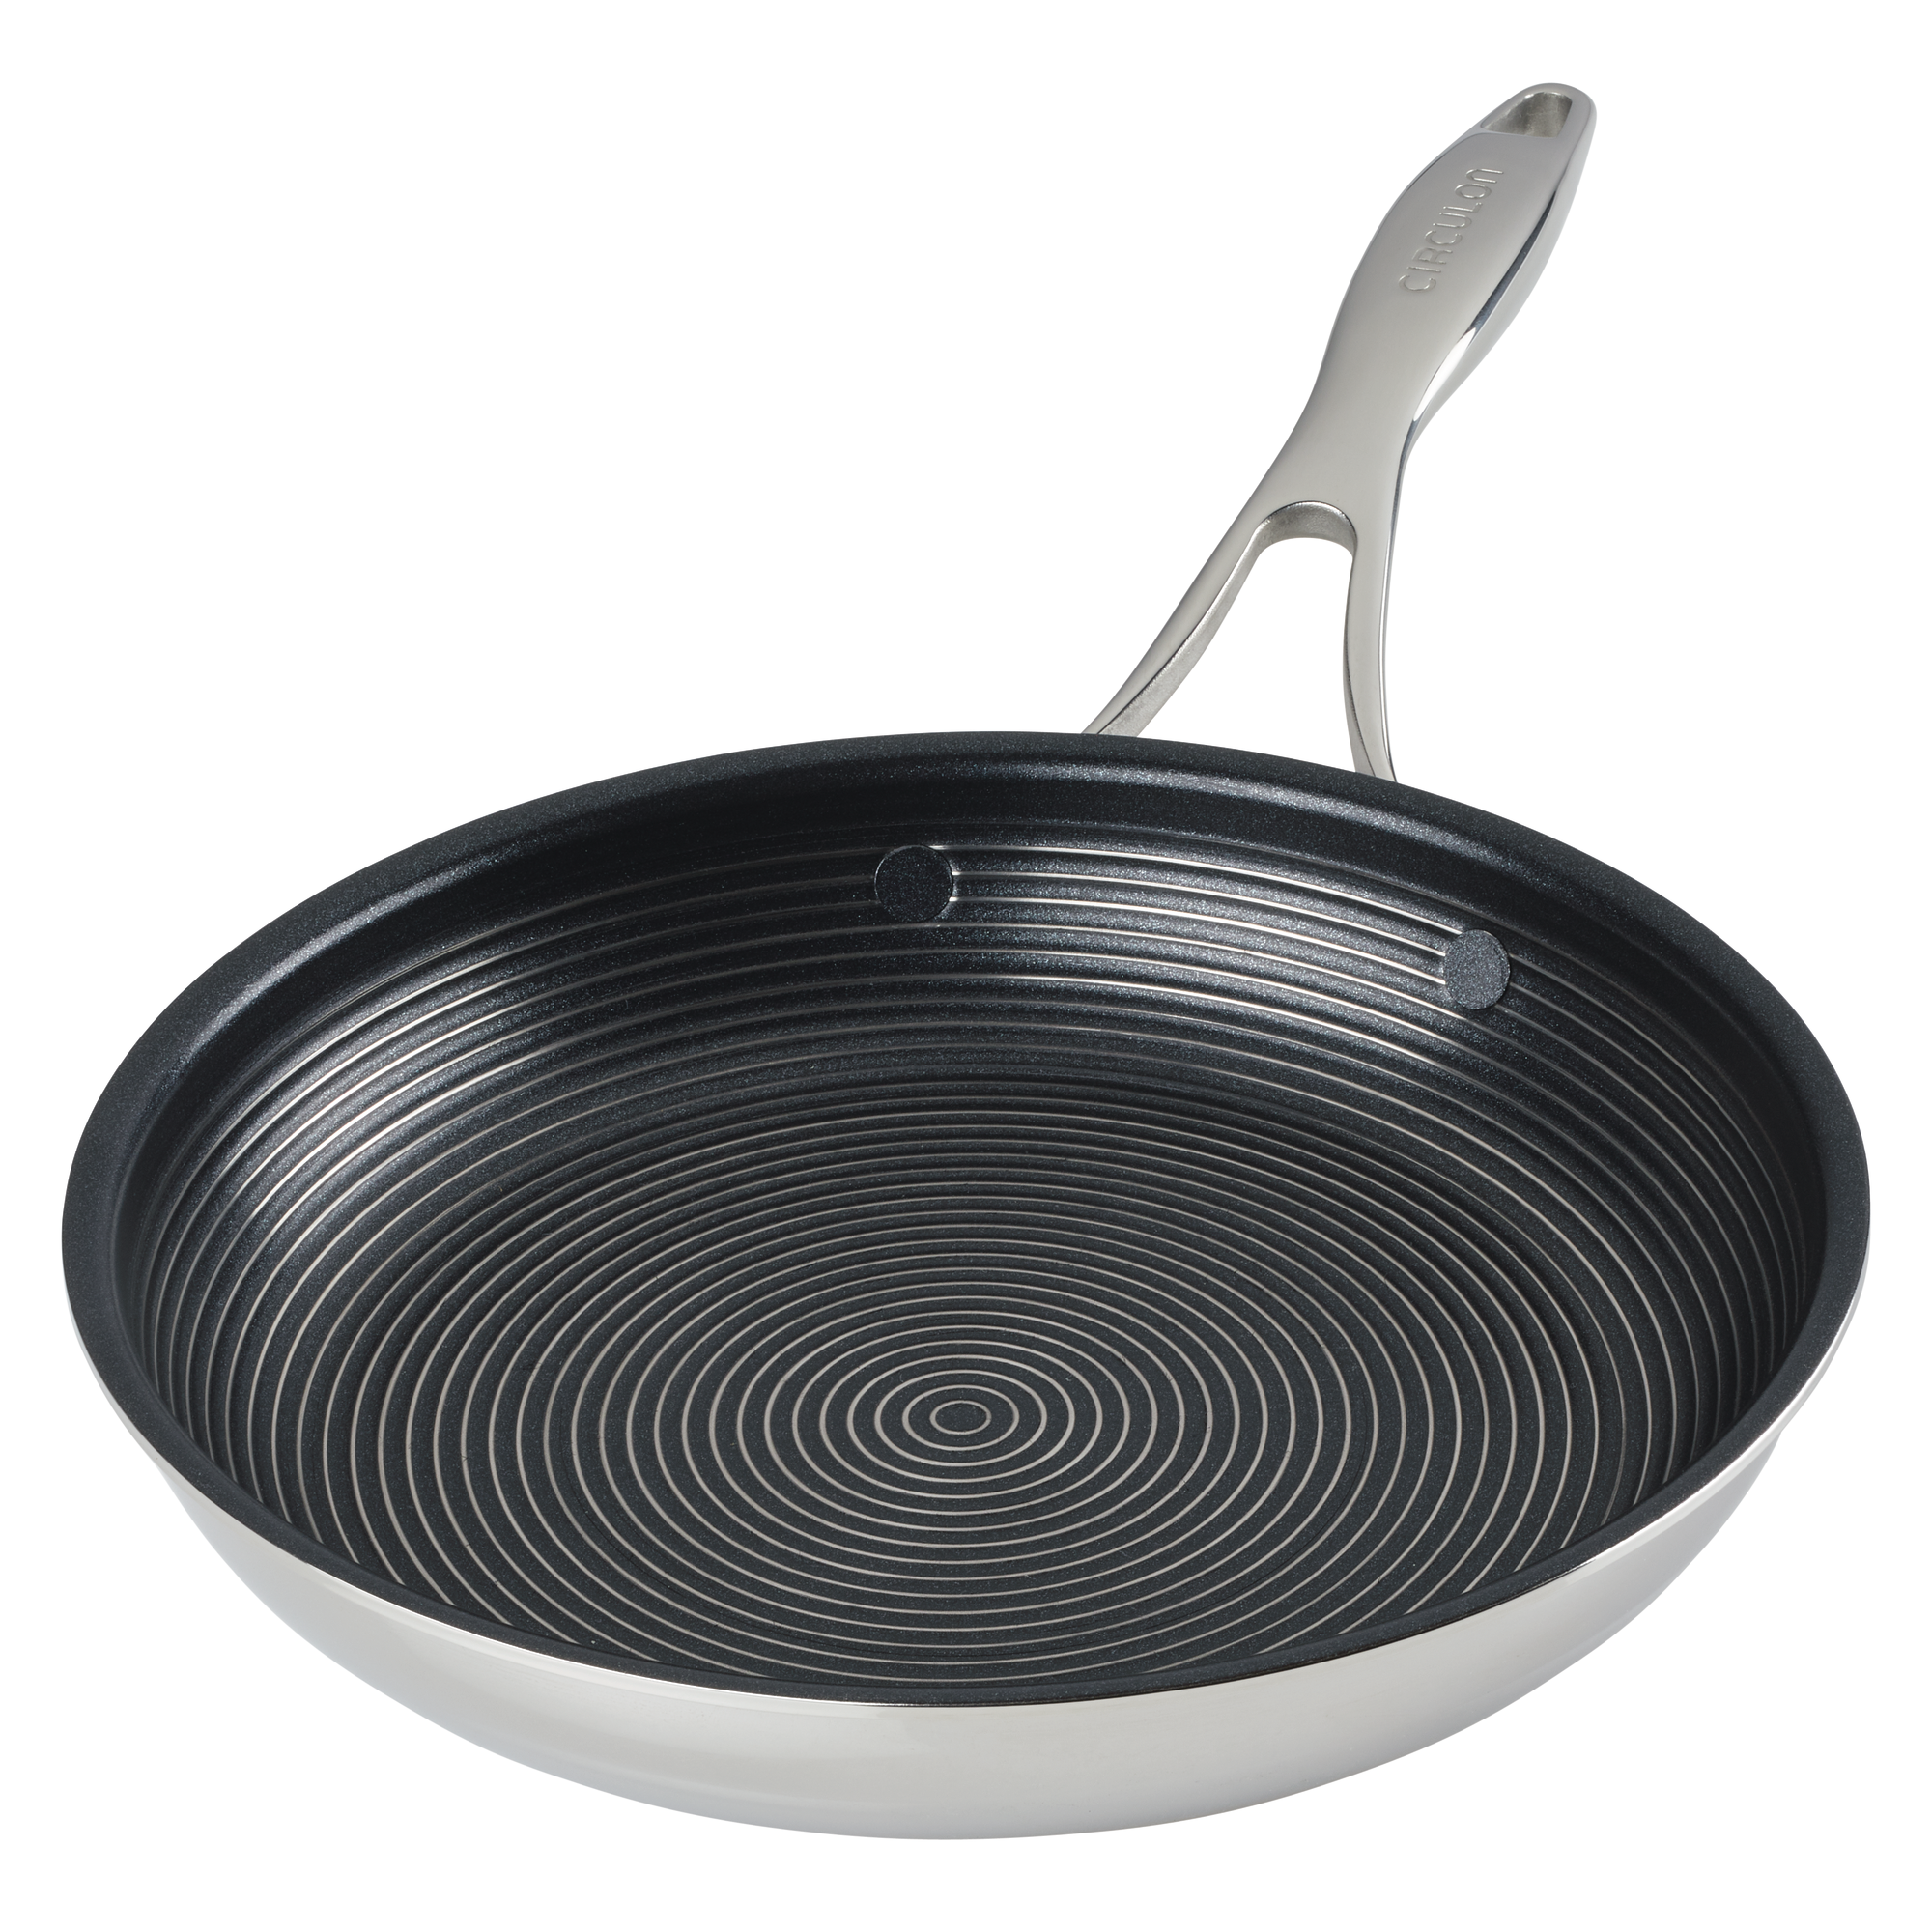 Hard-Anodized Nonstick Frying Pan Set – Circulon